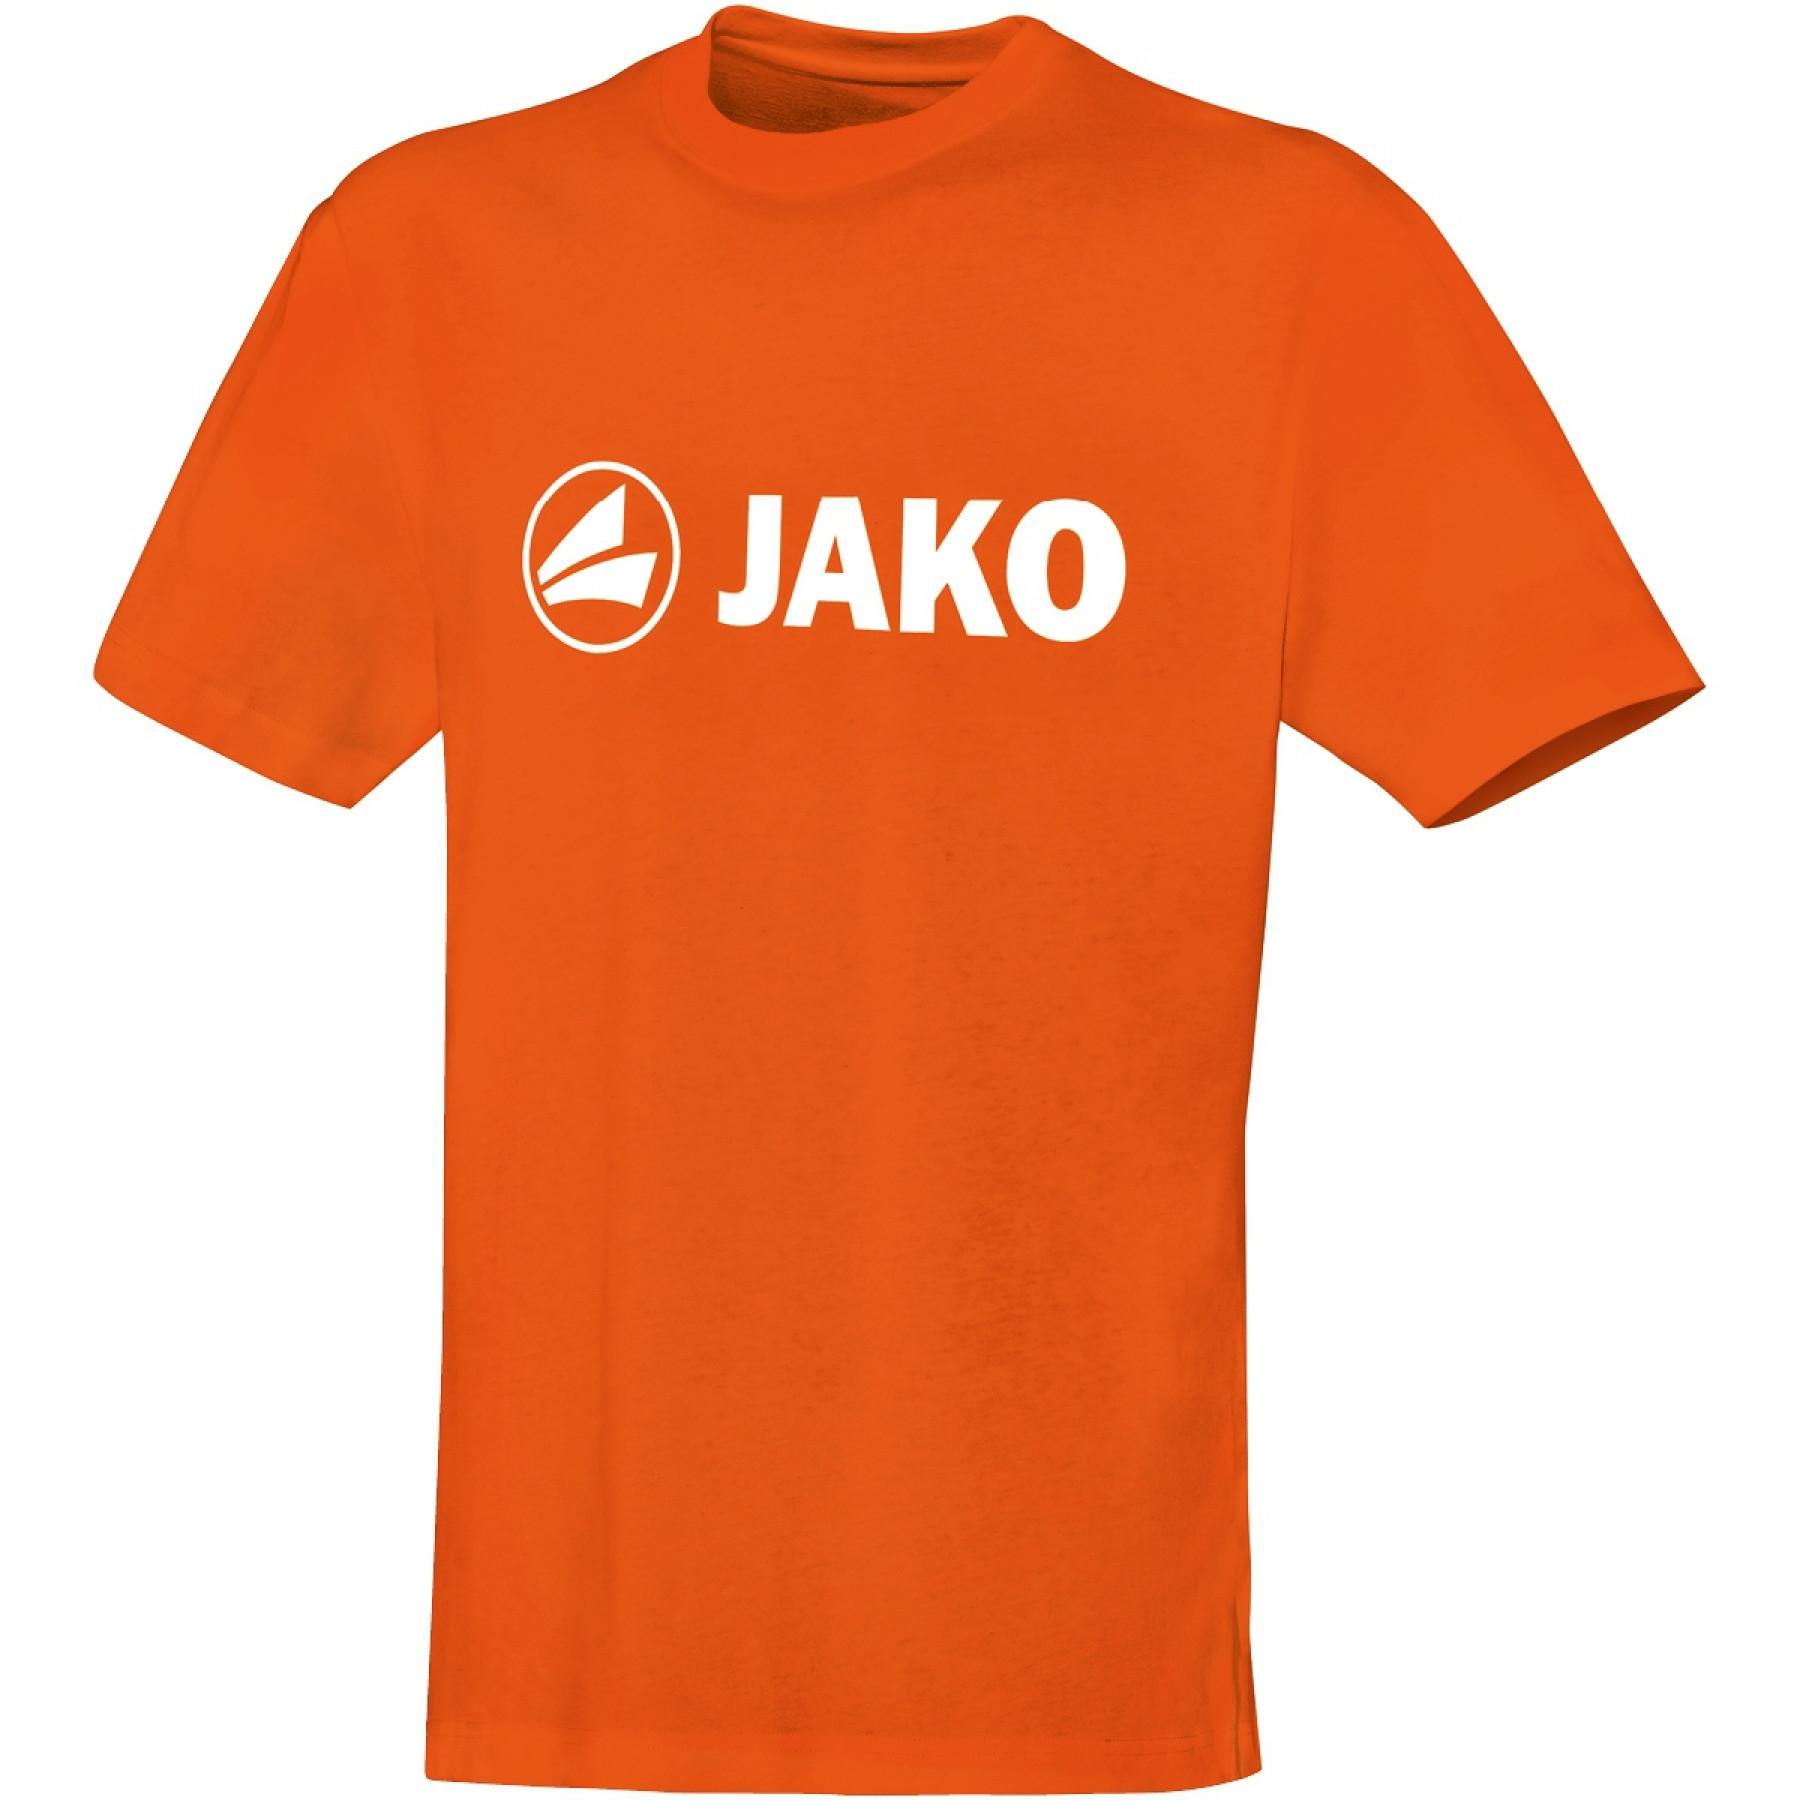 Junior-T-Shirt Jako Promo